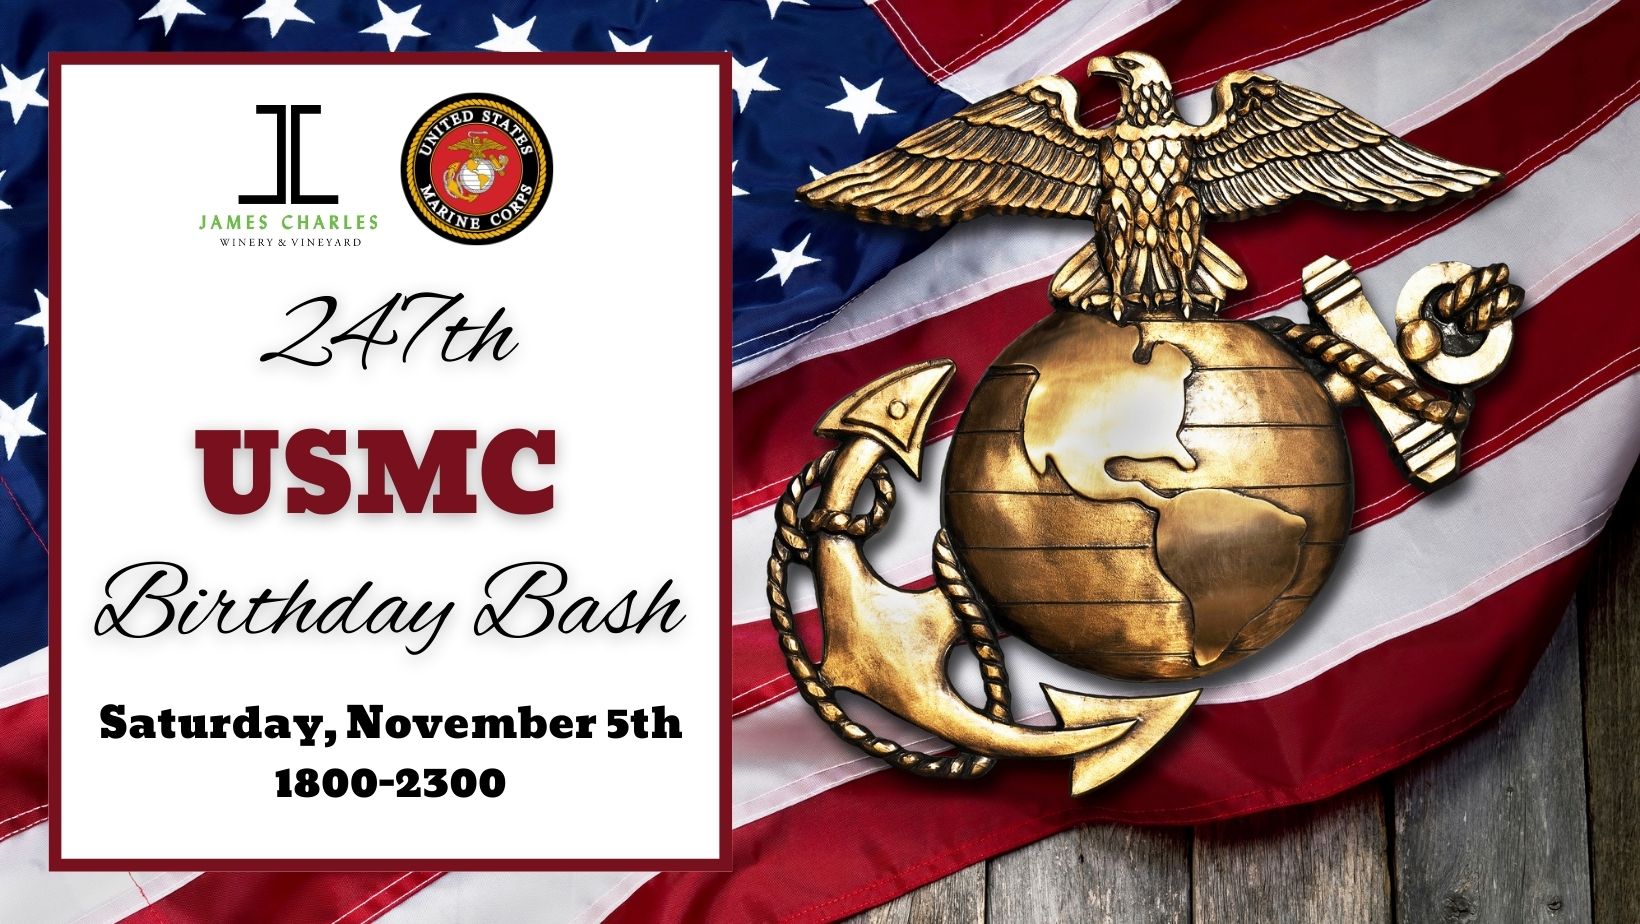 USMC 247th Birthday Bash